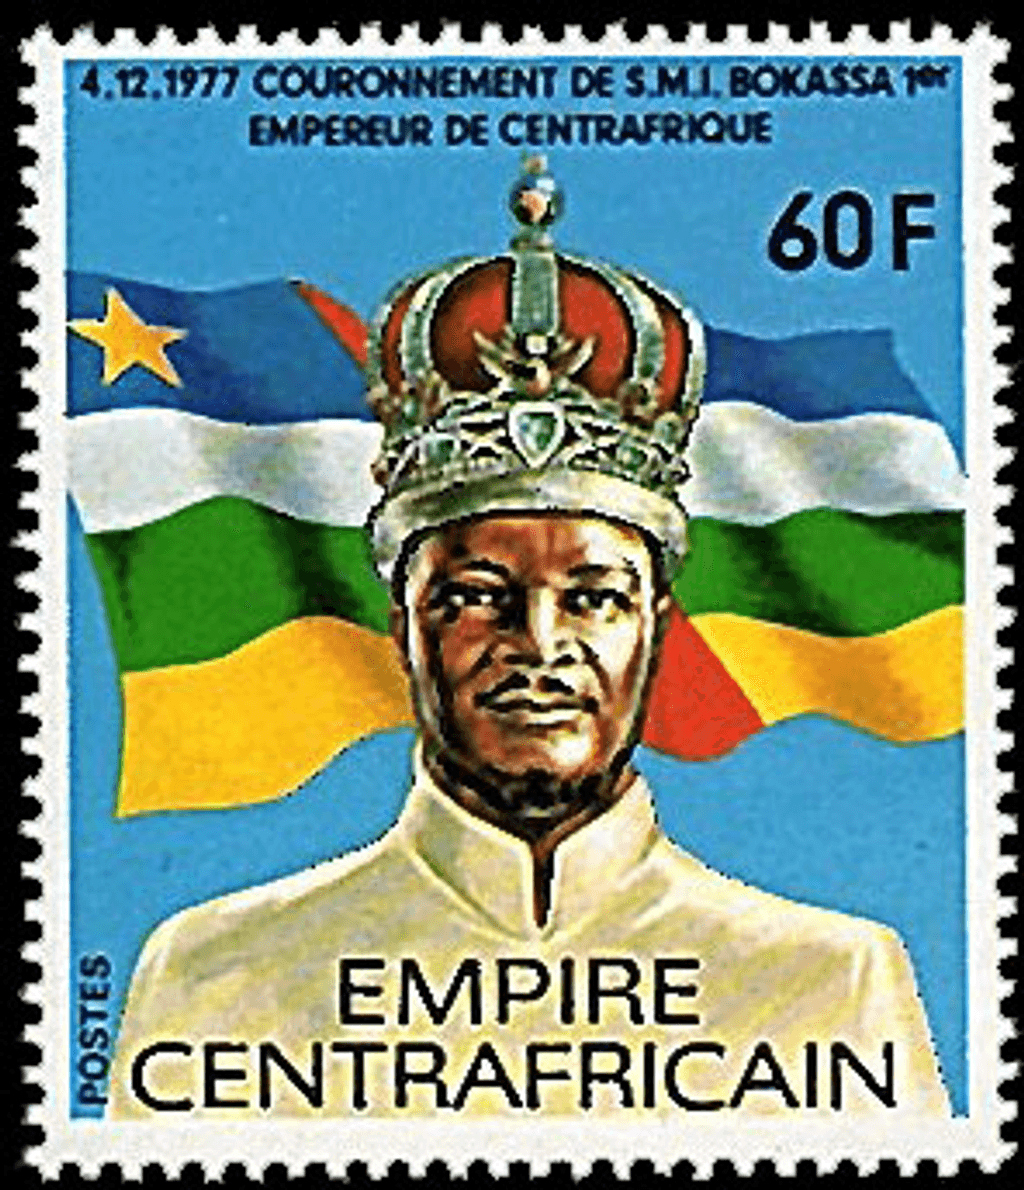 Coronation of jean bedel bokassa as empereur of Central Africa I